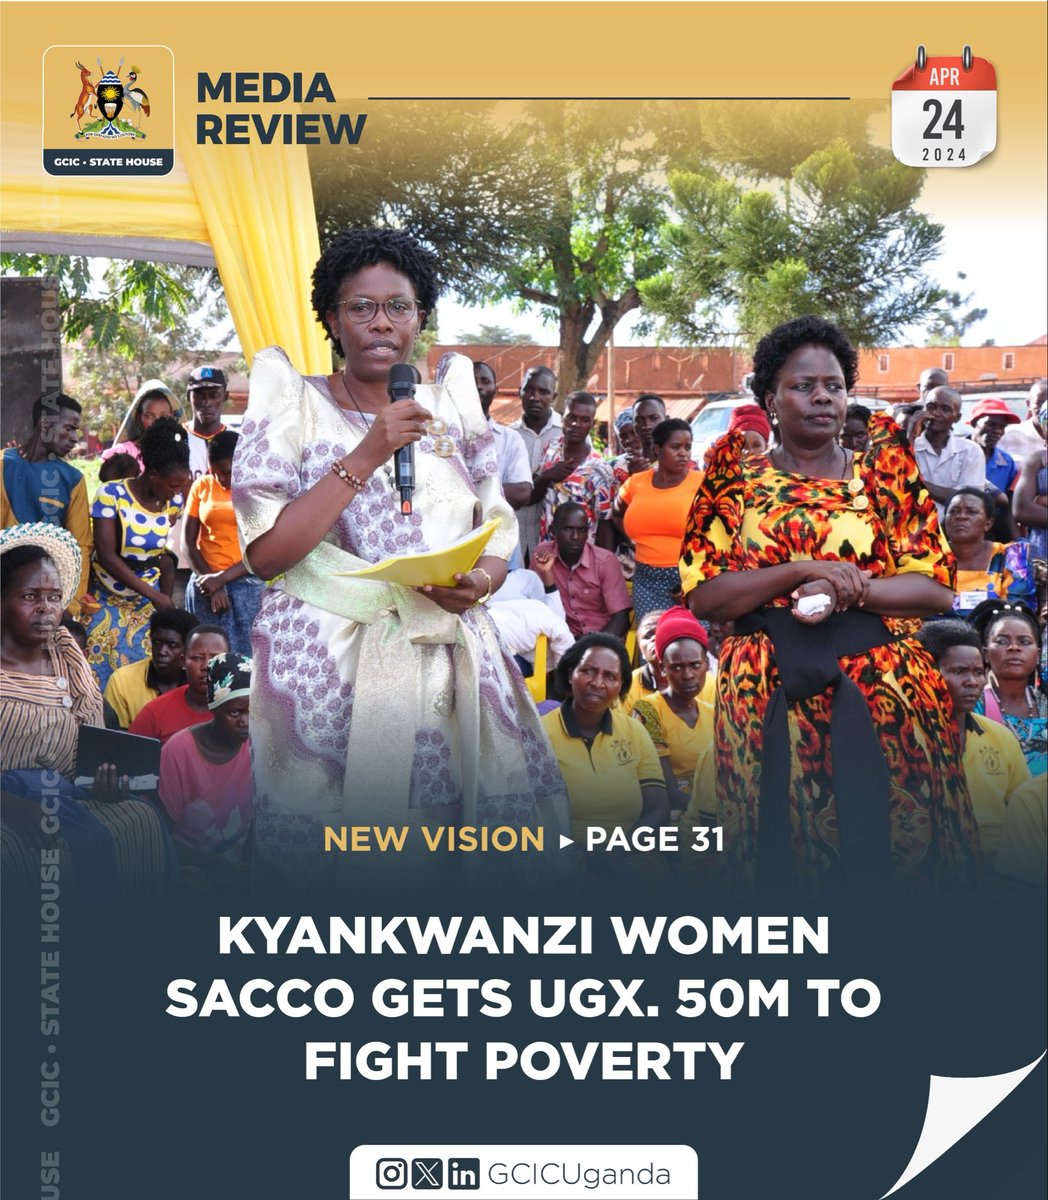 Kyankwazi women SACCO gets UGX 50 million to fight poverty. 
#GCICMediaReview #OpenGovUg